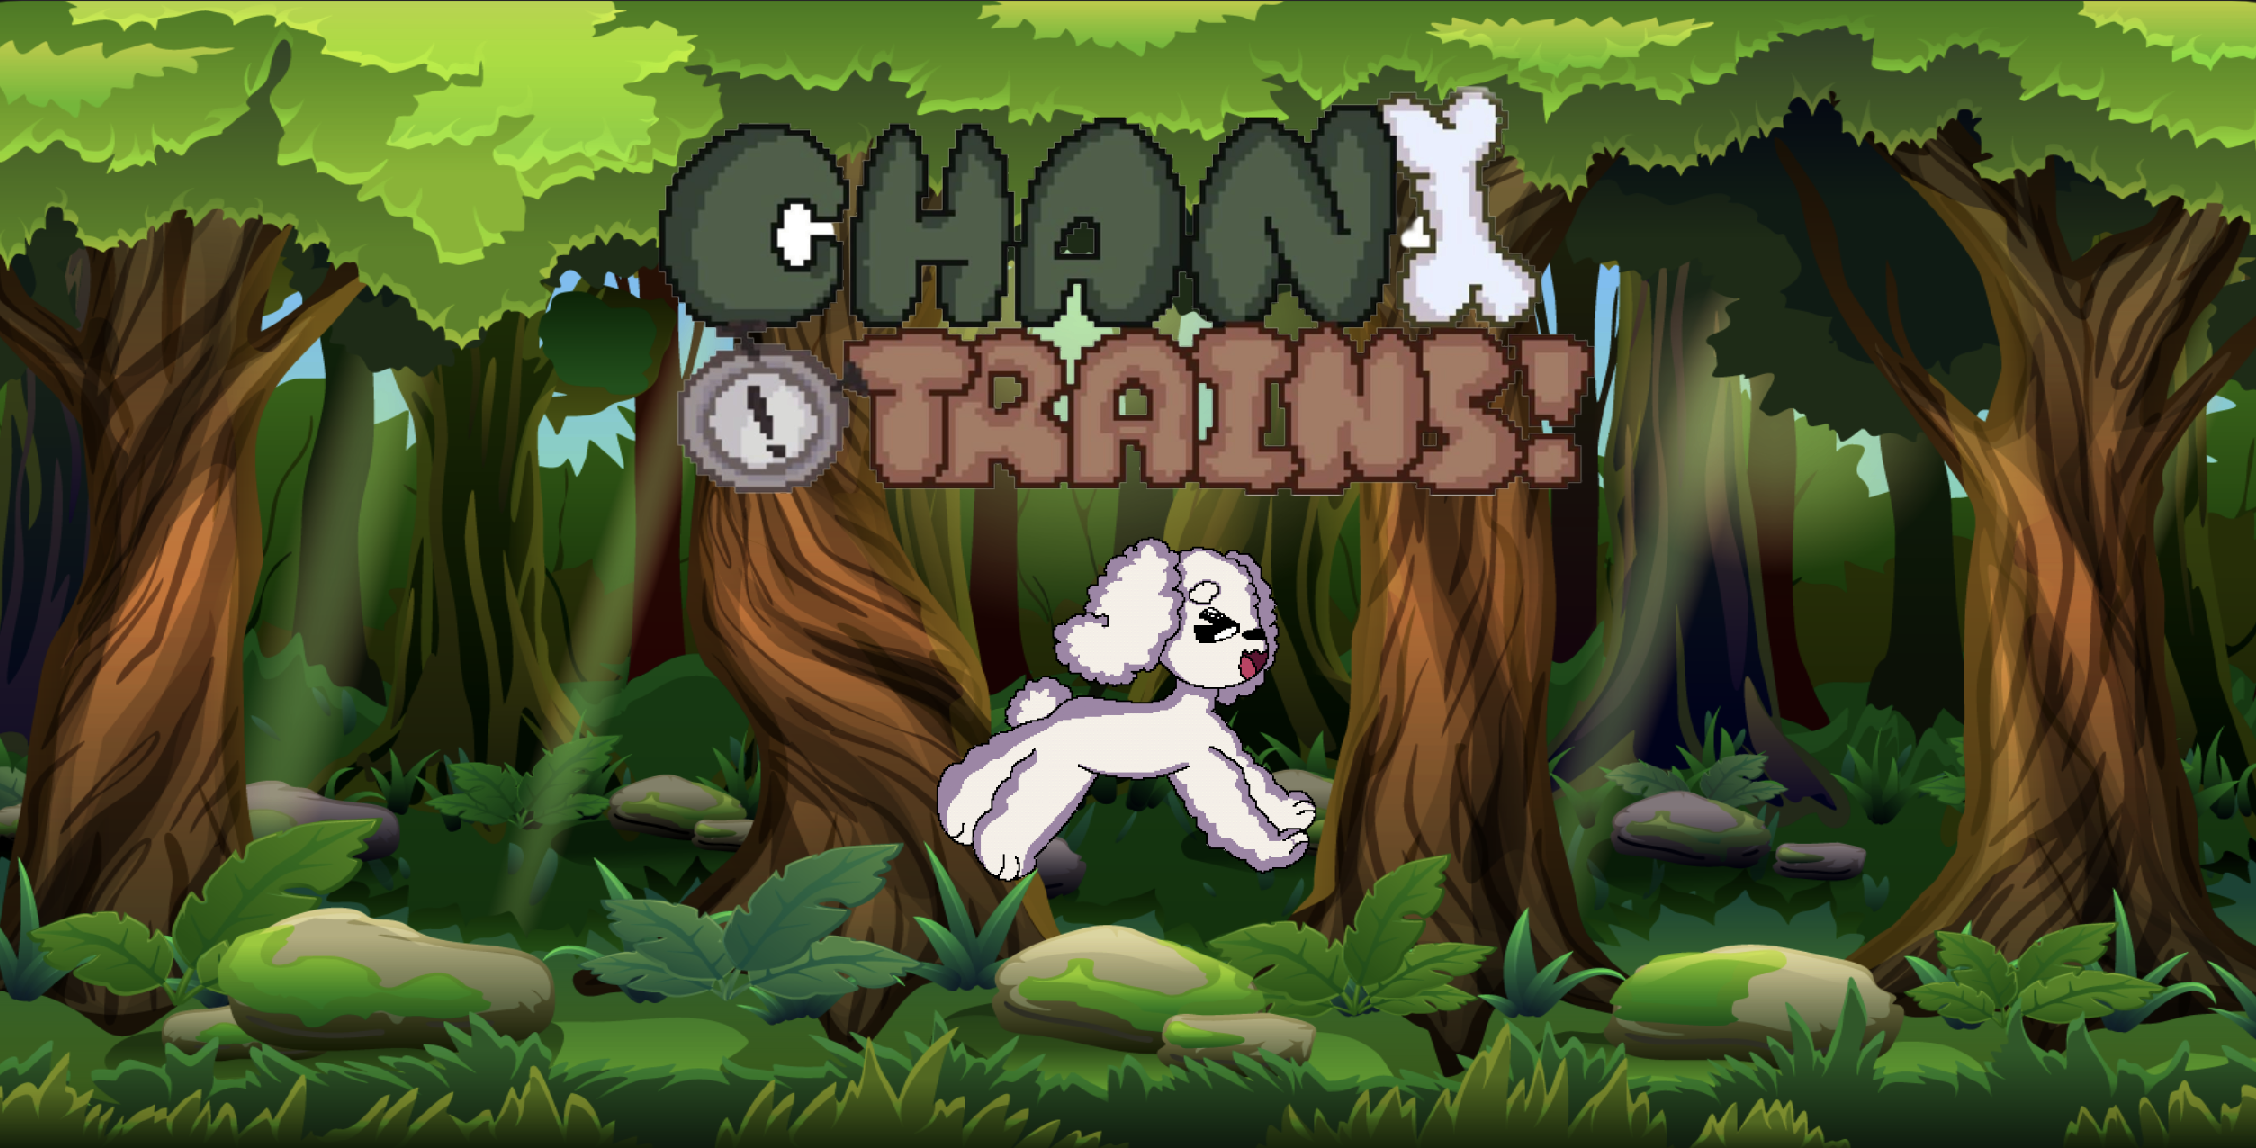 Chani Trains!